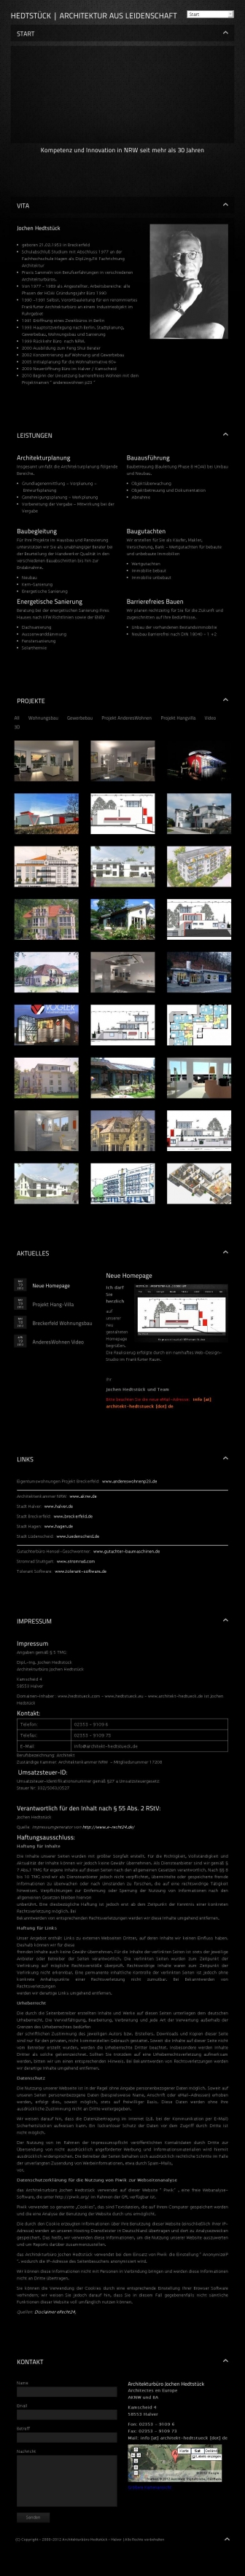 http://architekt-hedtstueck.de